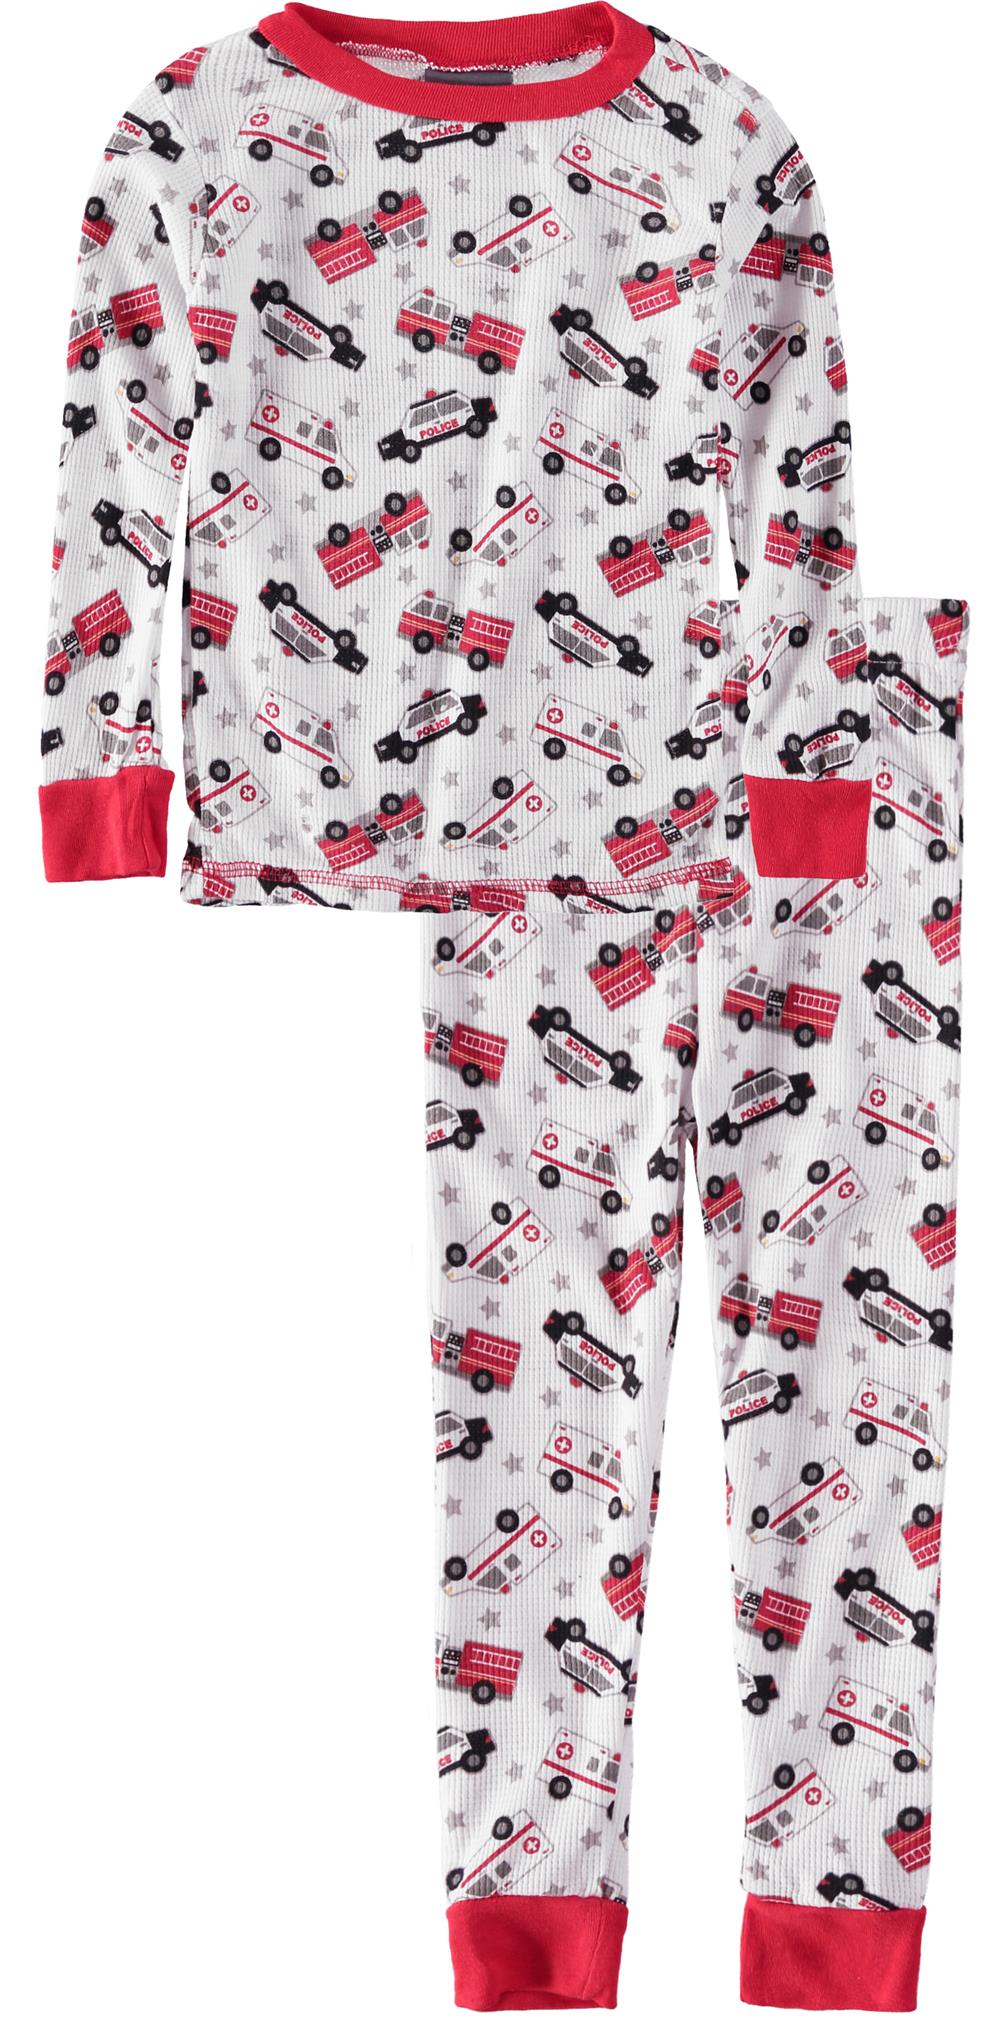 Mon Petit Boys 12-24 Months Long-Sleeve Thermal Underwear Pajama Set